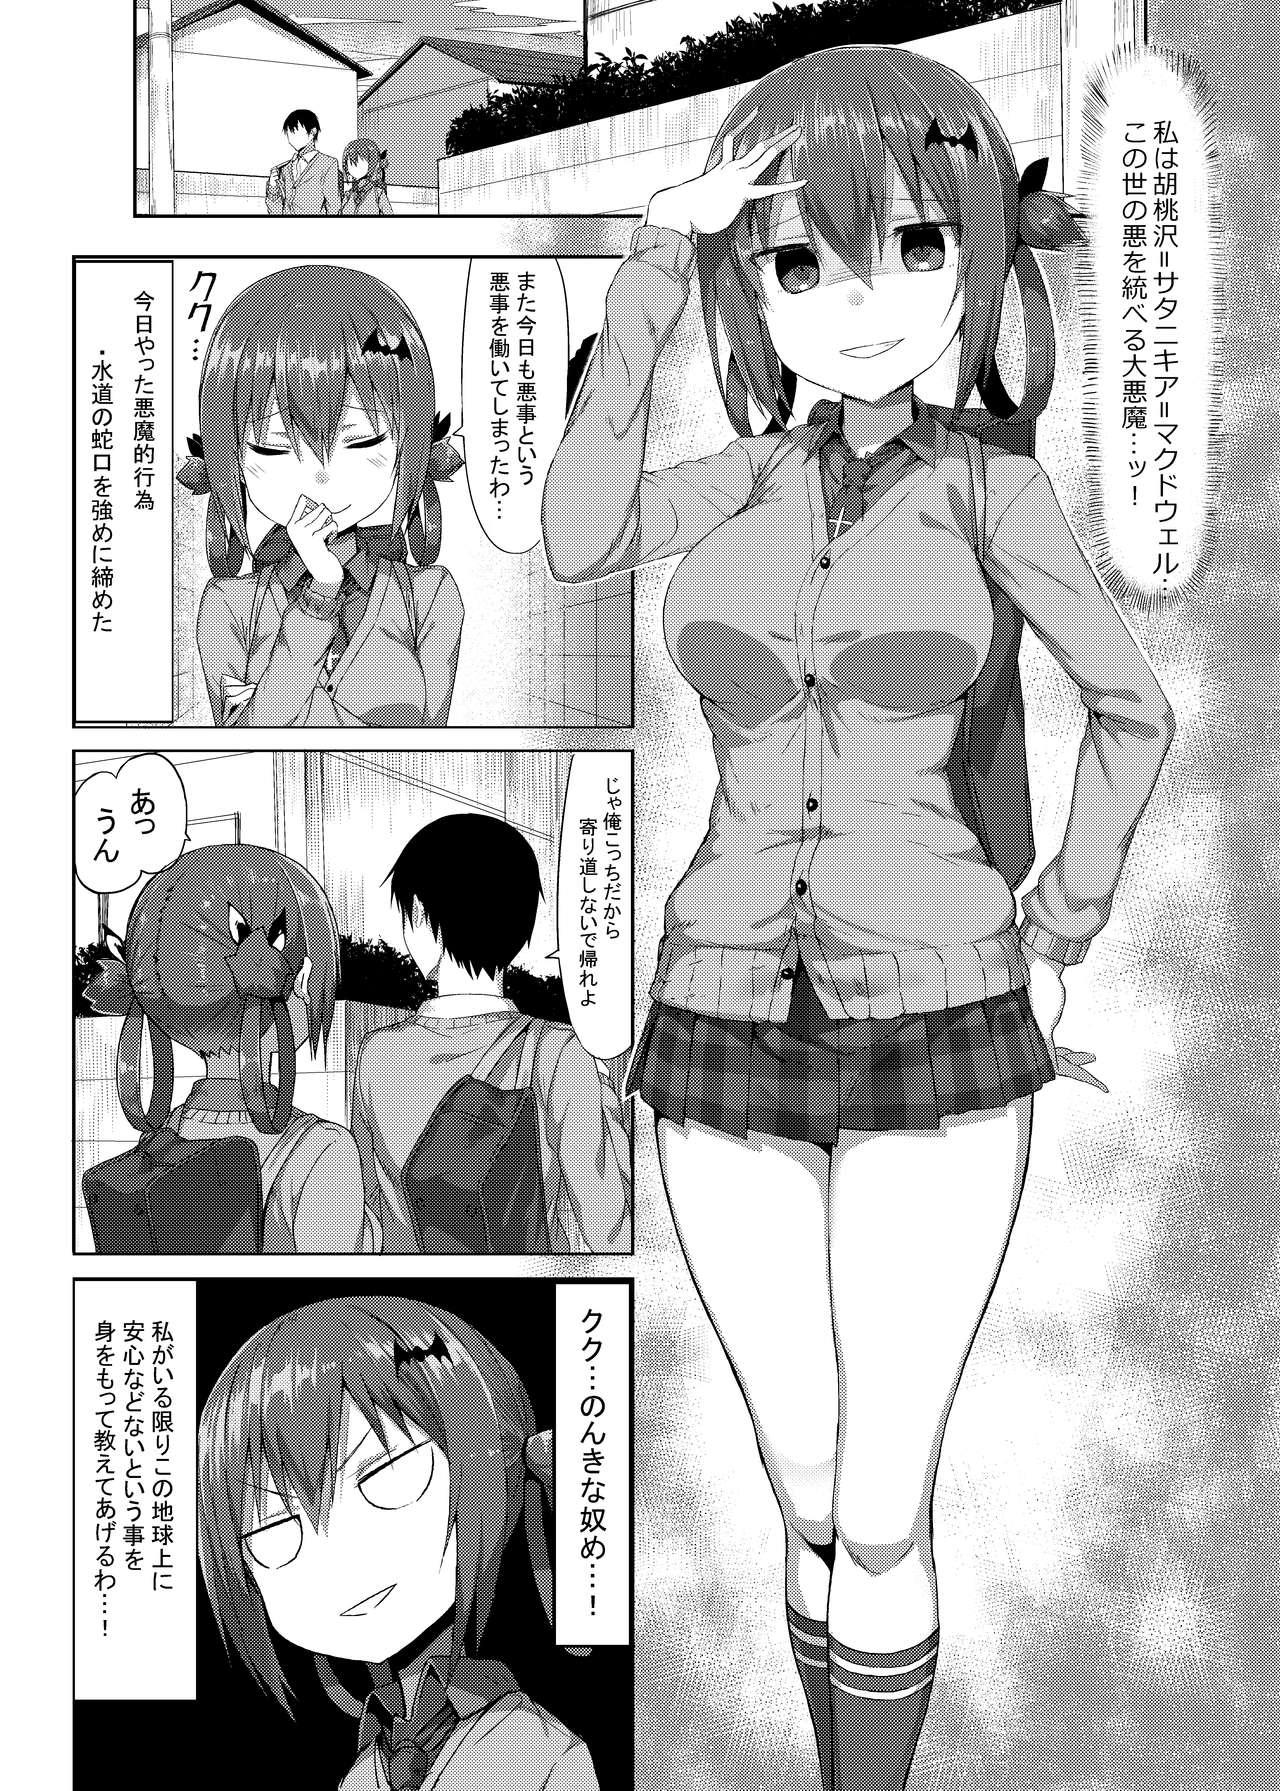 Bed Koisuru Dai Akuma - Gabriel dropout Sapphicerotica - Page 2